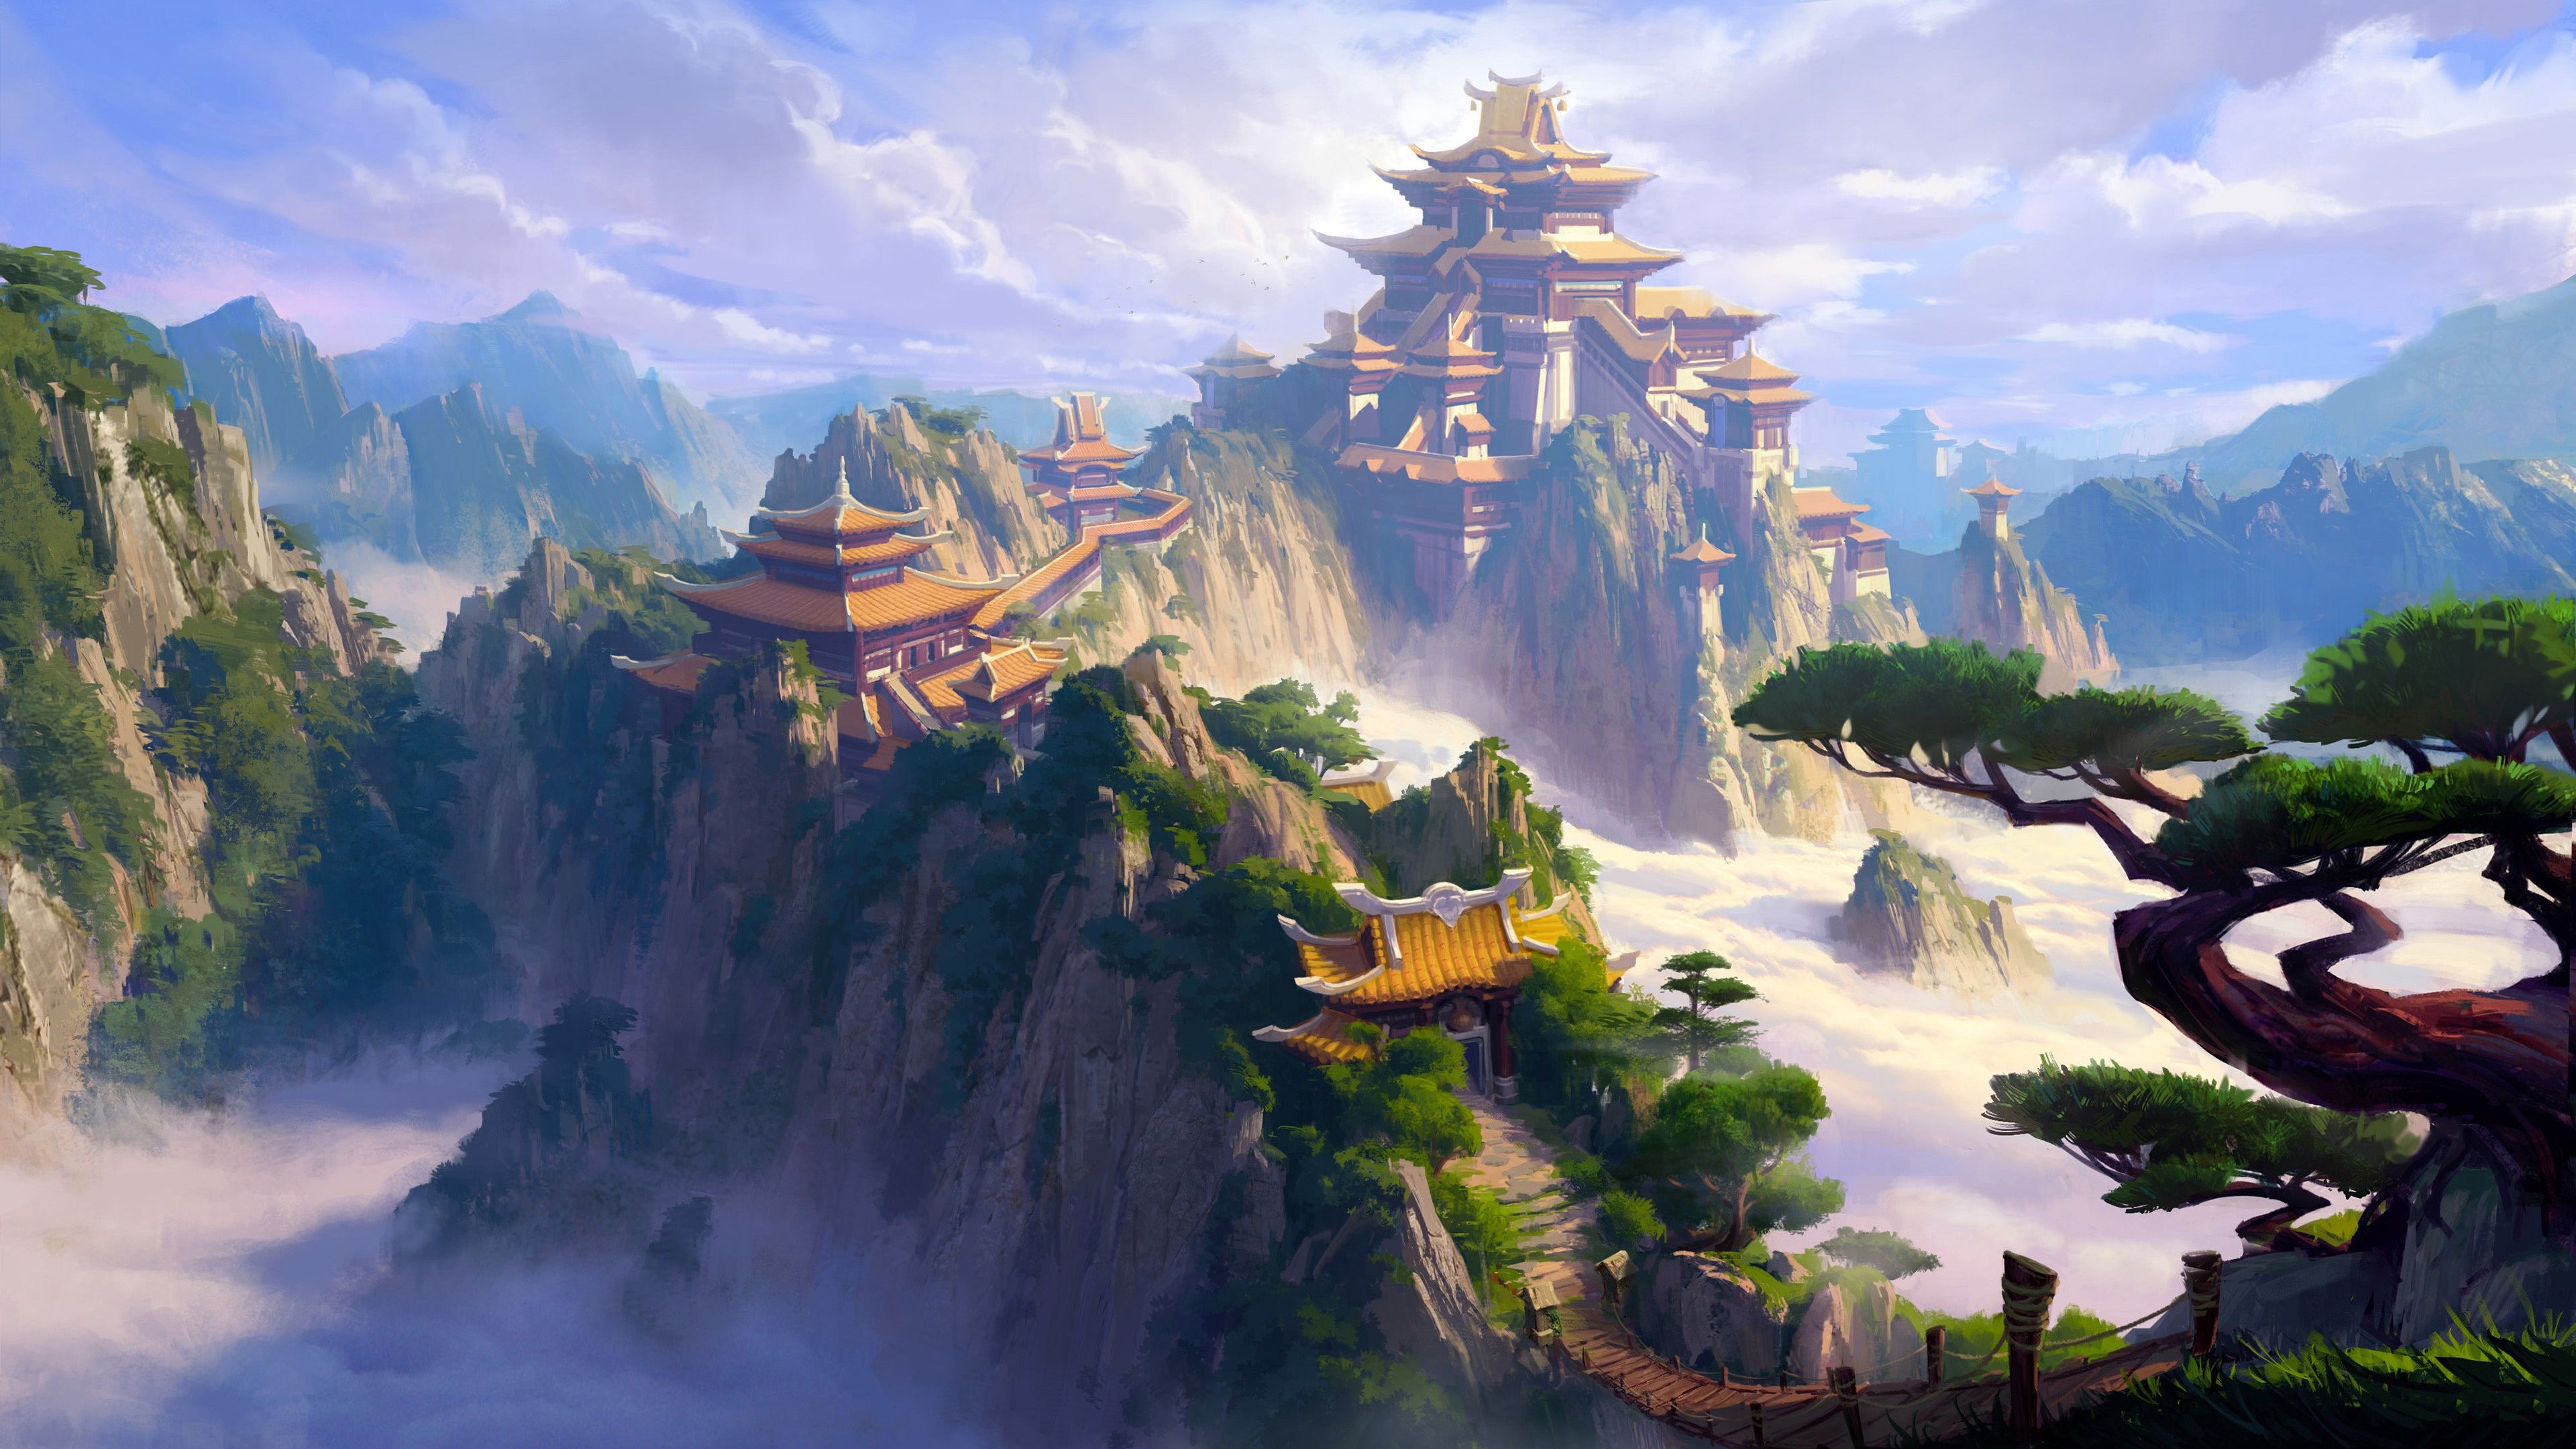 Fantasy Landscape 4k Ultra HD Wallpaper